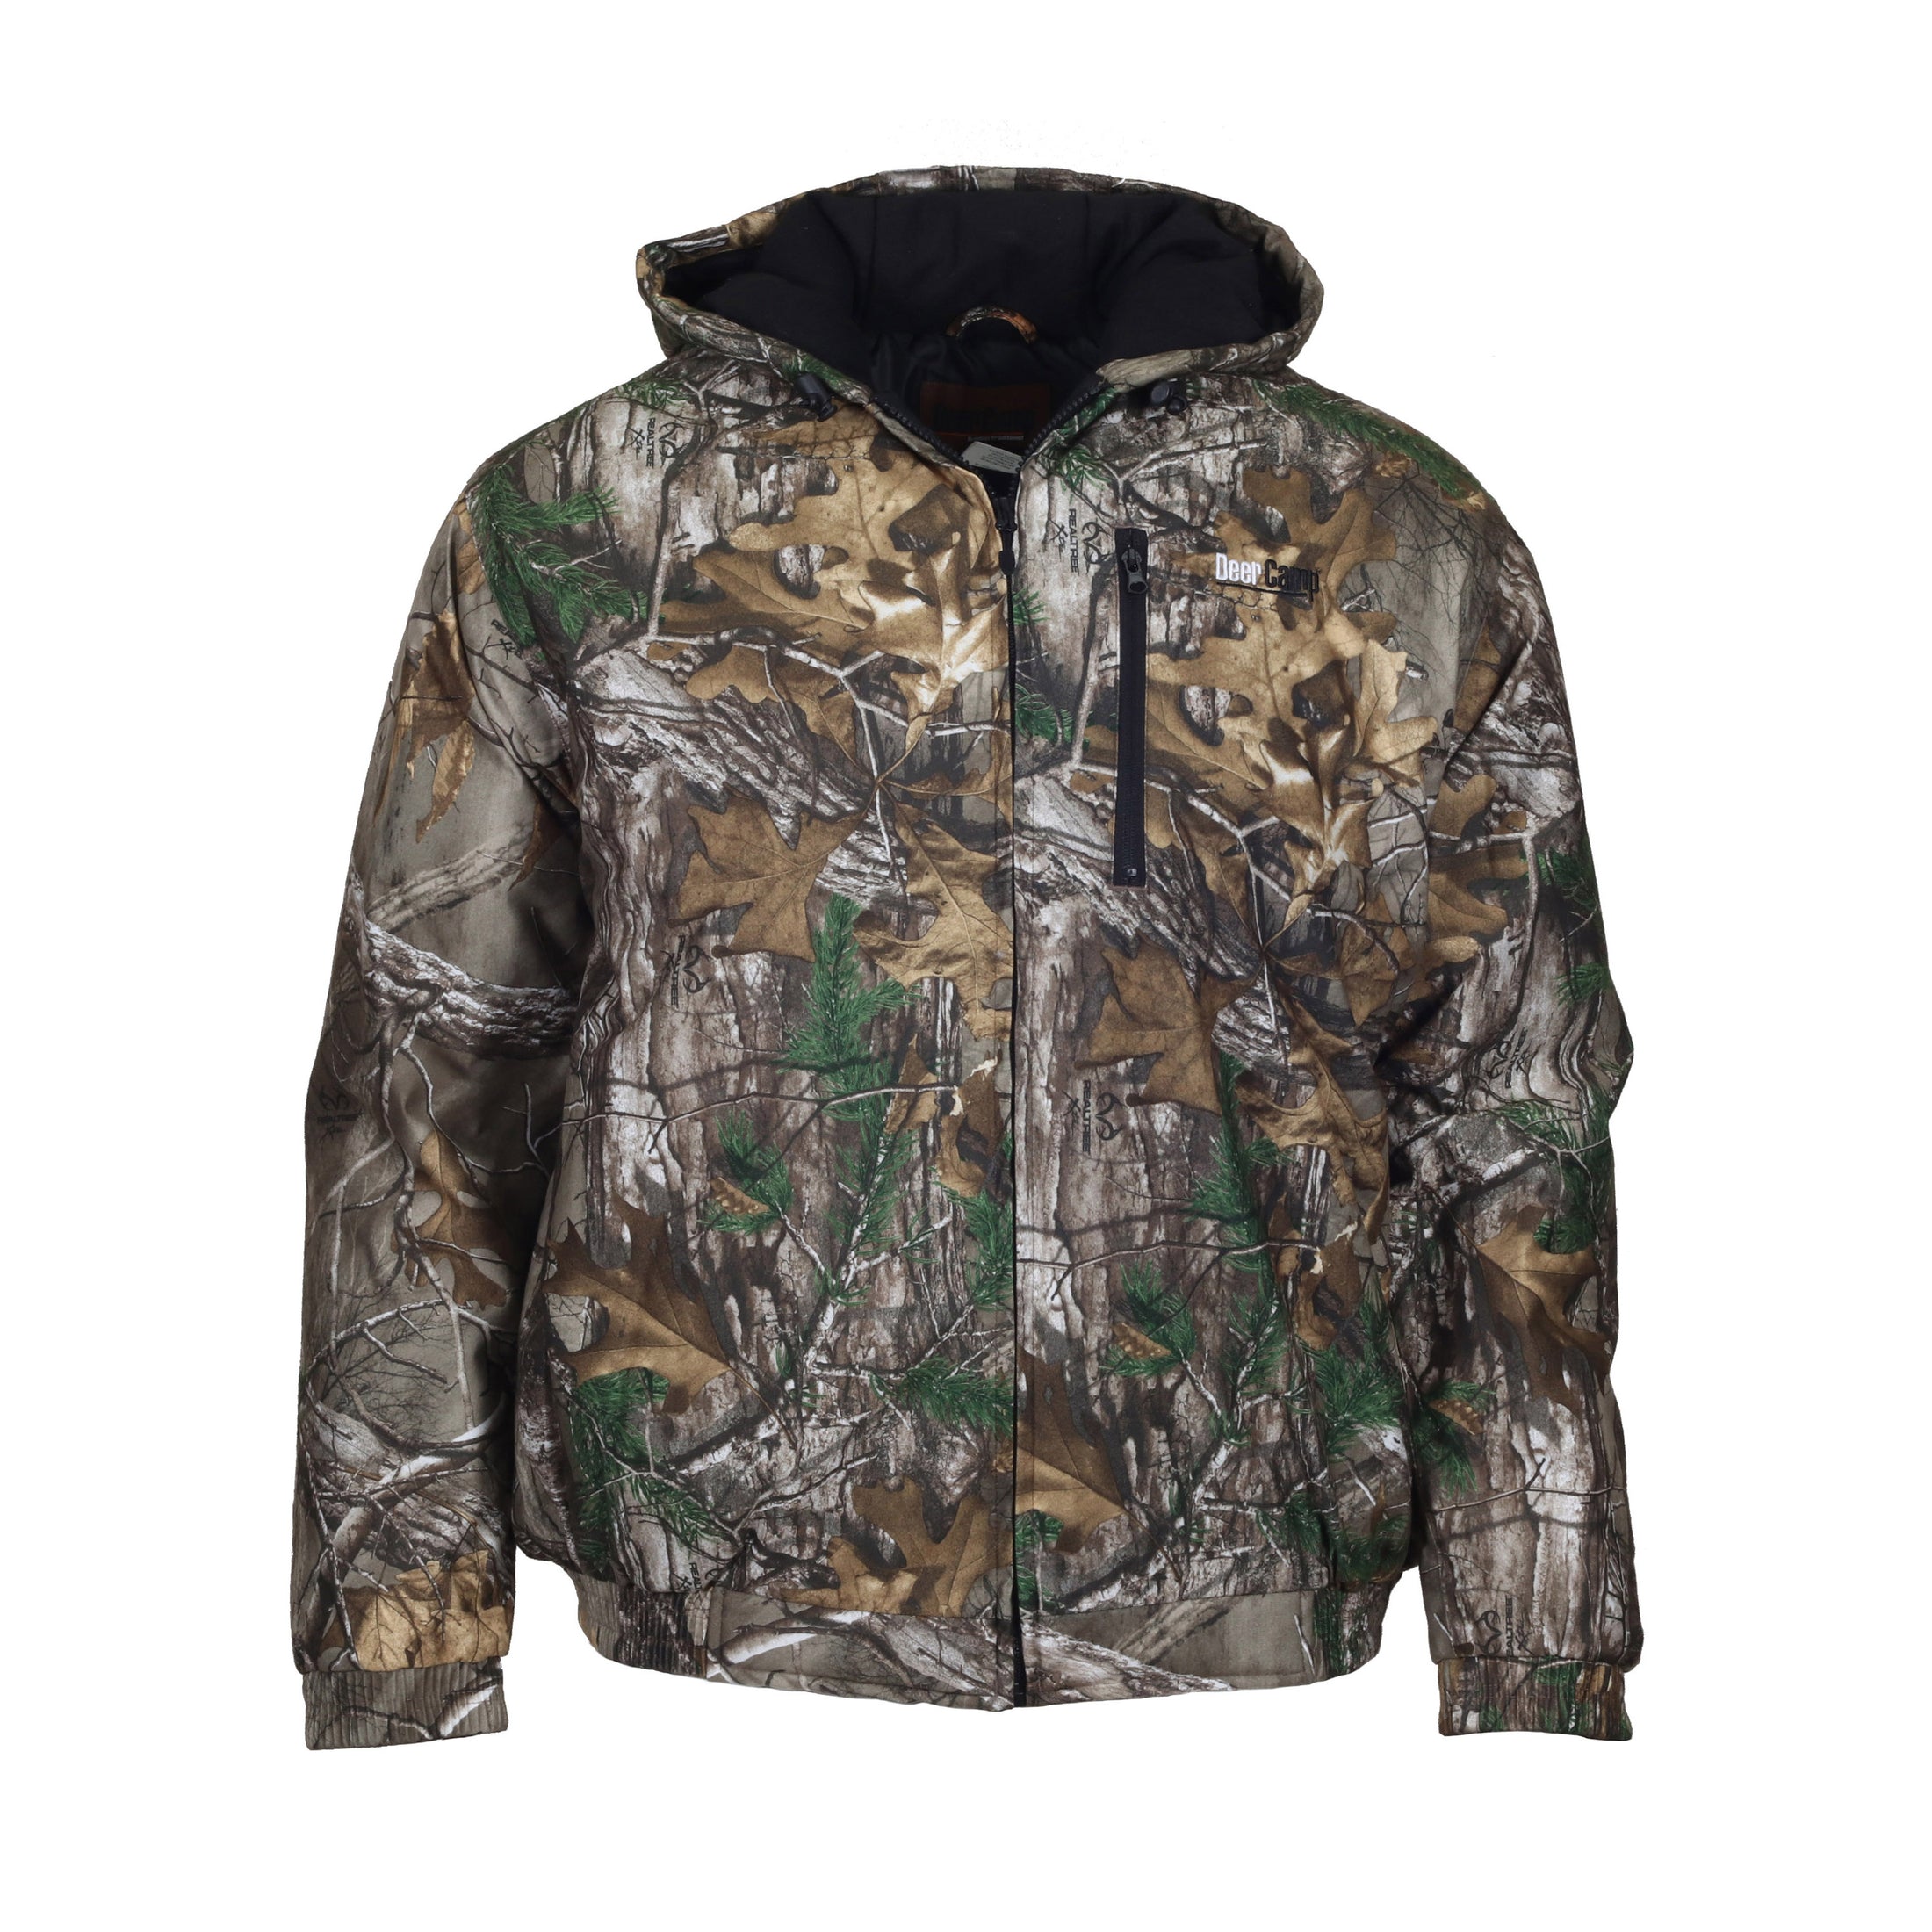 Deer Camp jacket front (realtree xtra)